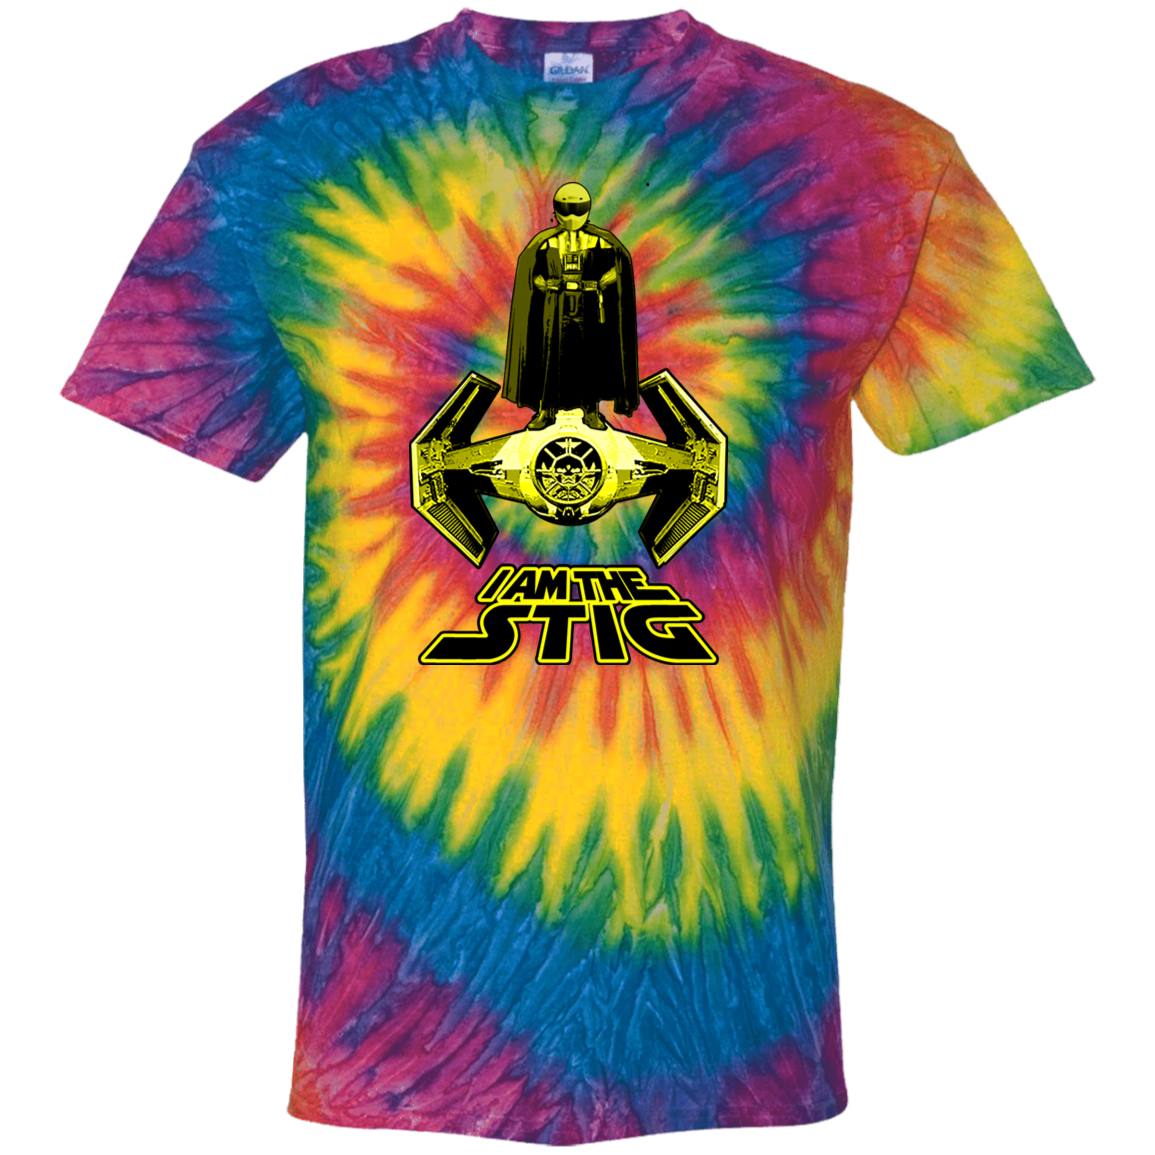 ArtichokeUSA Custom Design. I am the Stig. Vader/ The Stig Fan Art. 100% Cotton Tie Dye T-Shirt